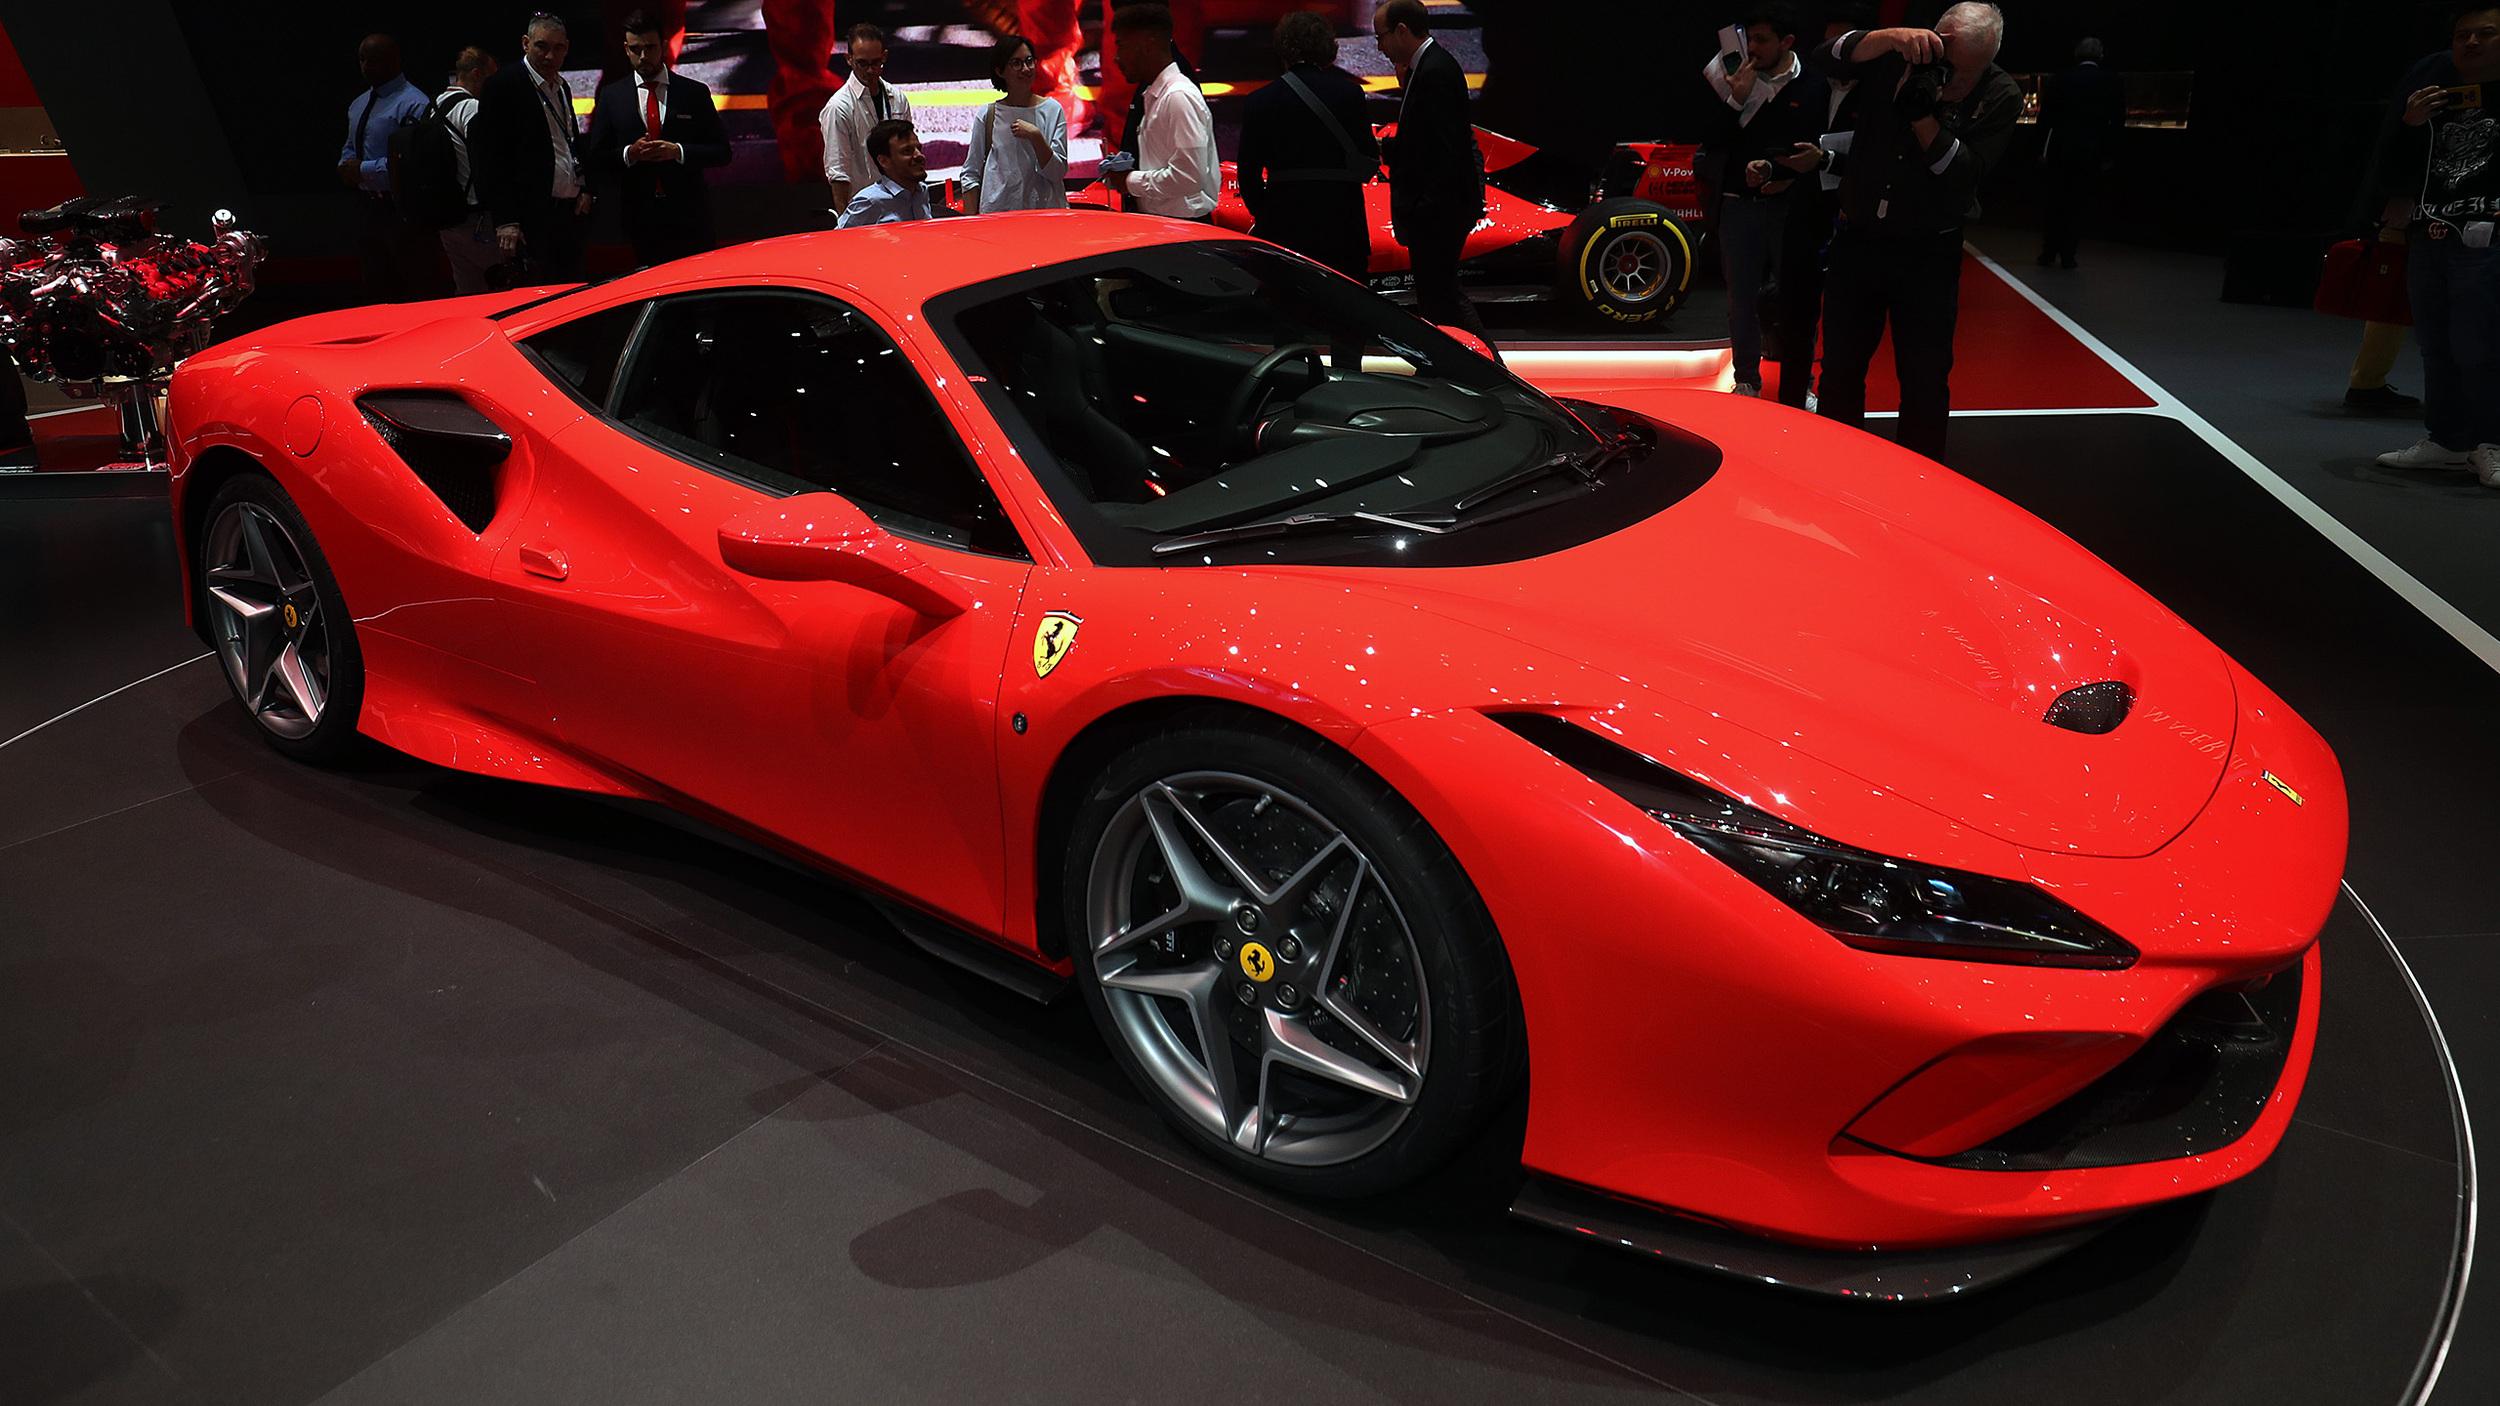 Ferrari F8 Tributo: Geneva 2019 Photo Gallery